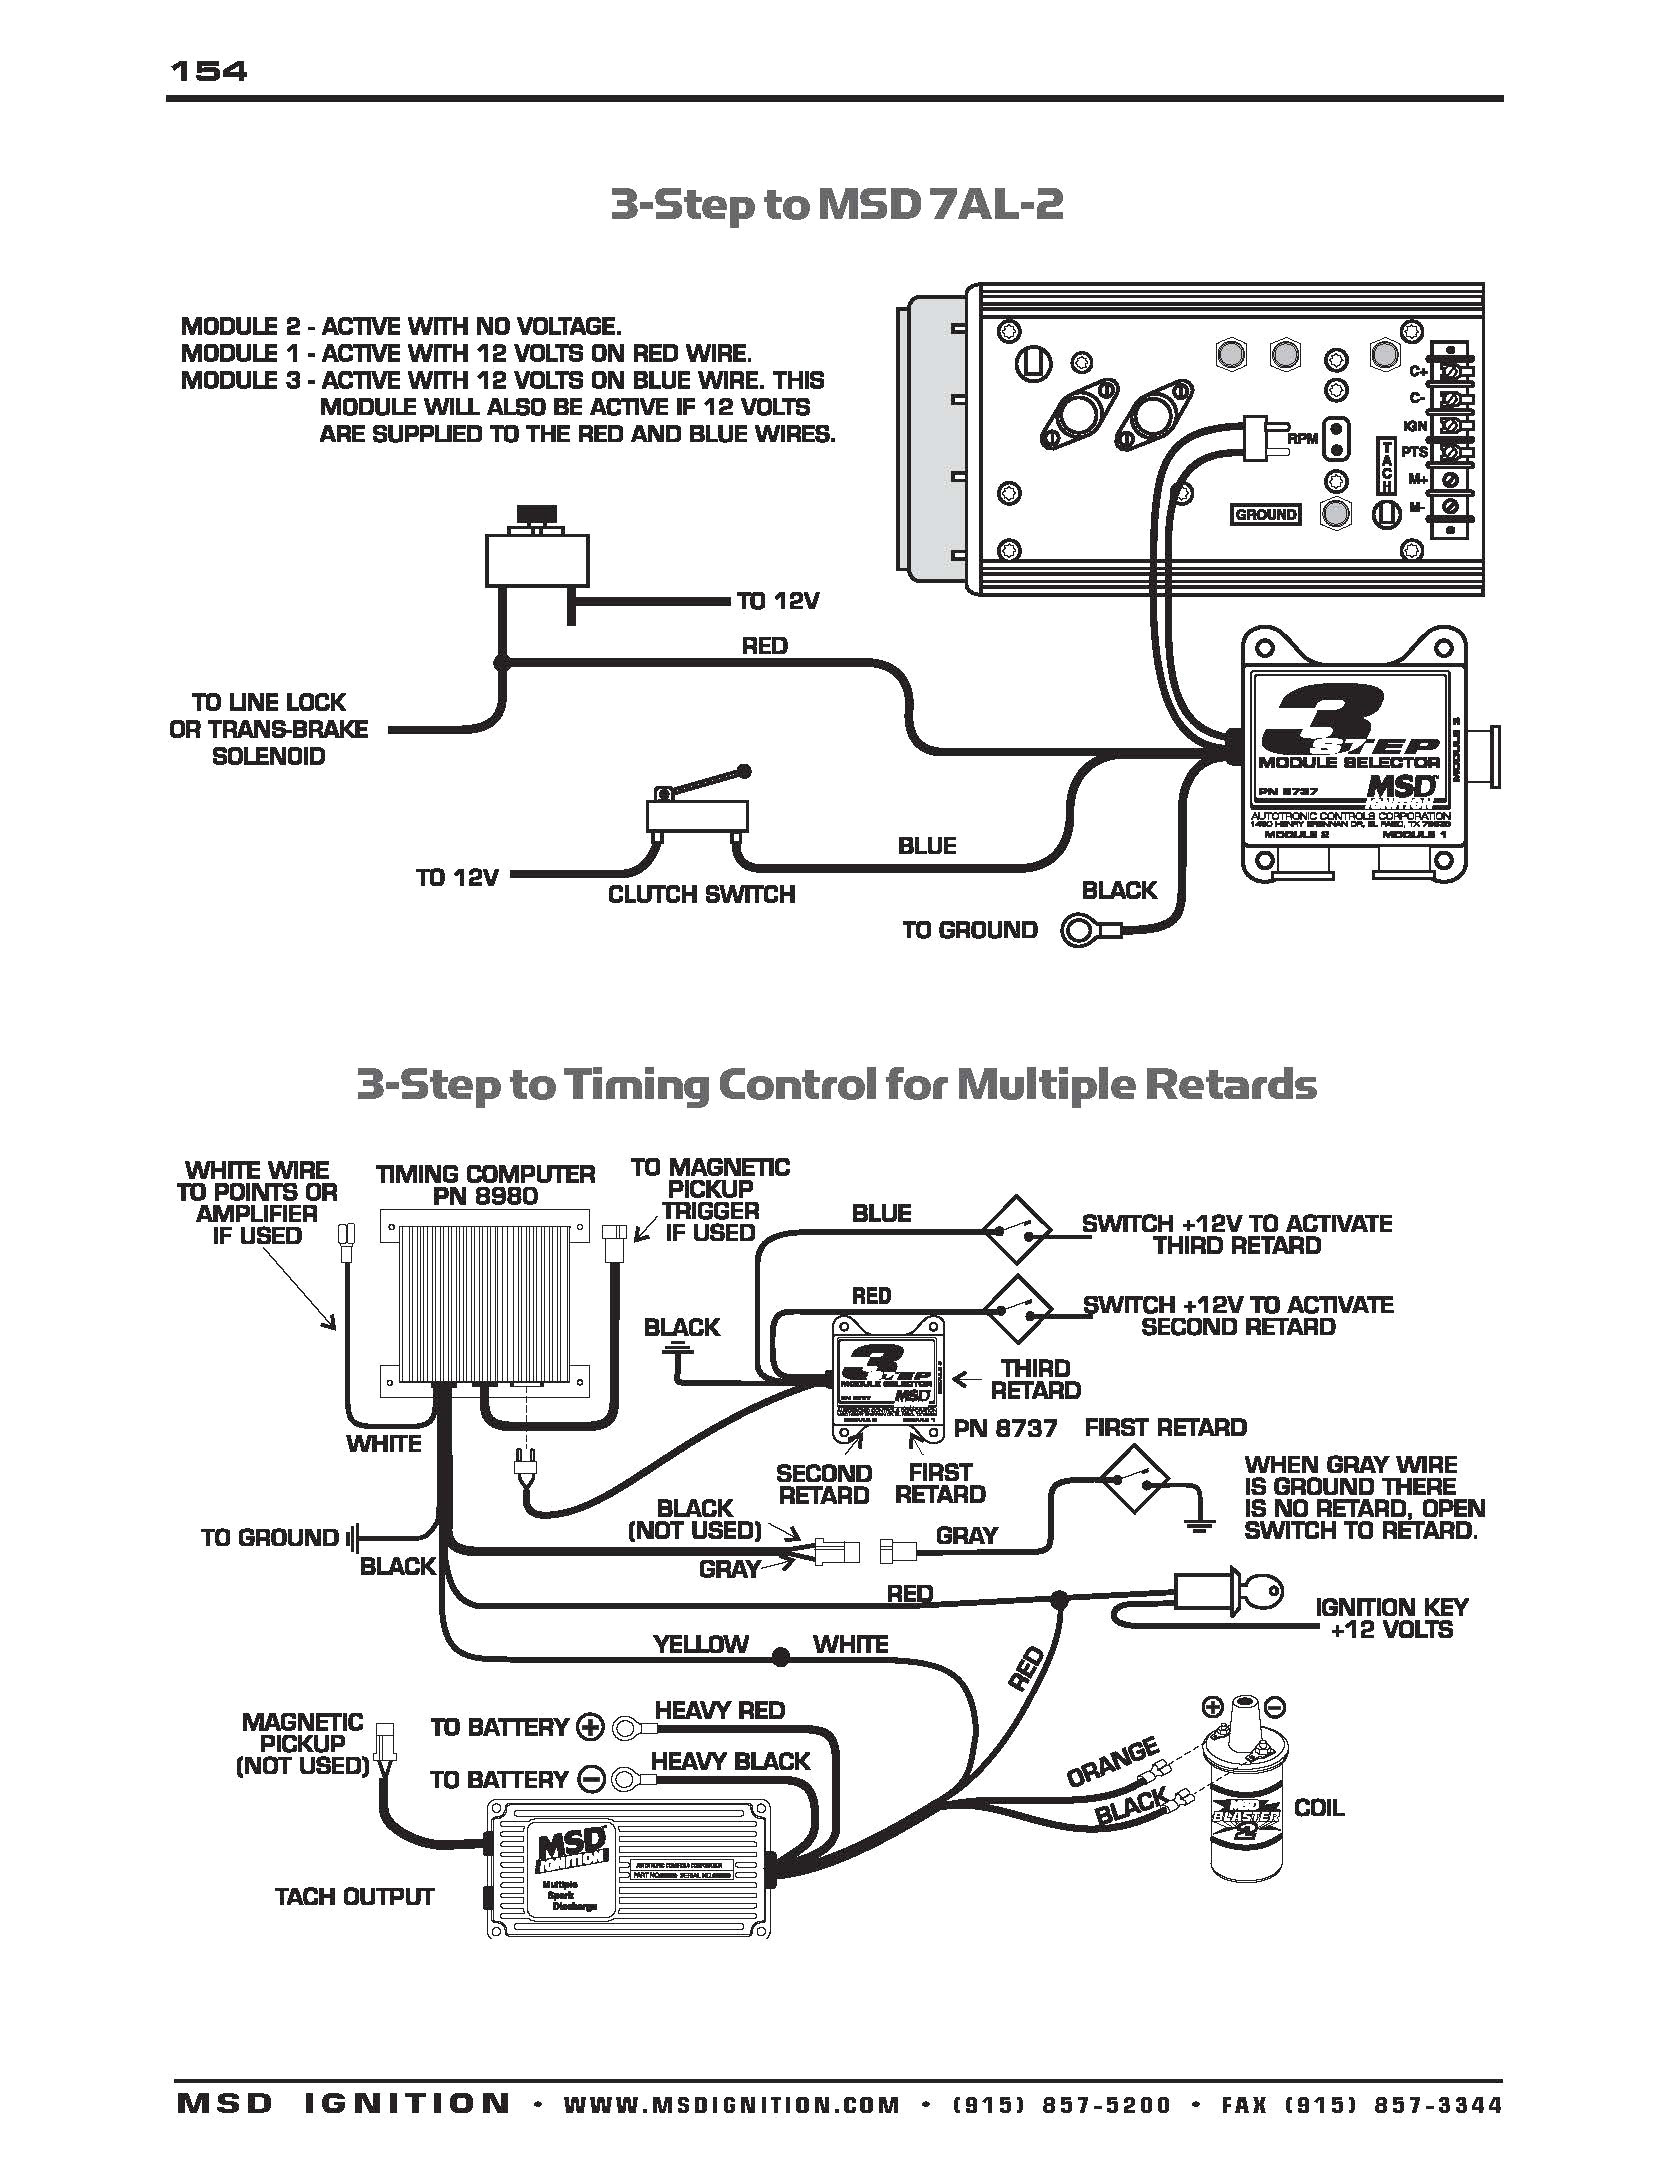 msd digital 7 wiring diagram wiring diagram digital 7 wiring likewise msd 6al ignition box further